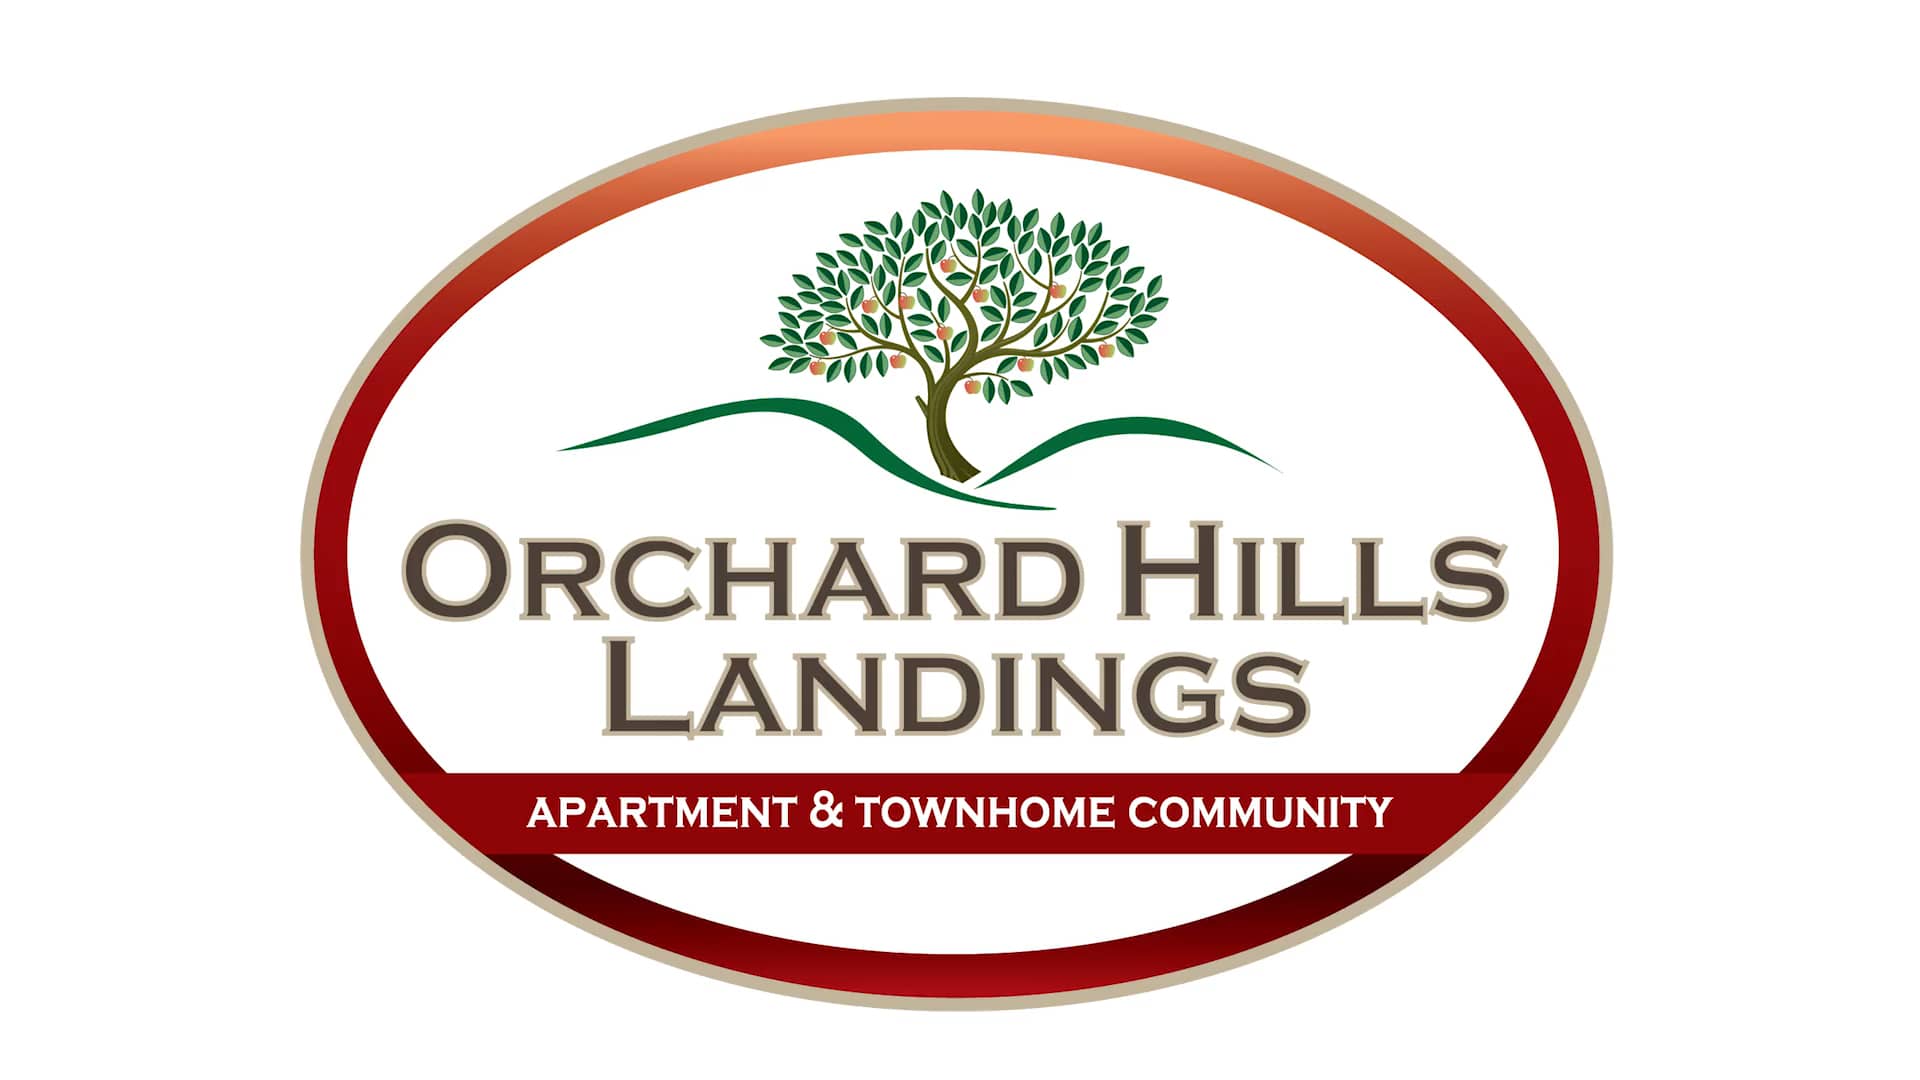 Orchard Hill Landings on Vimeo